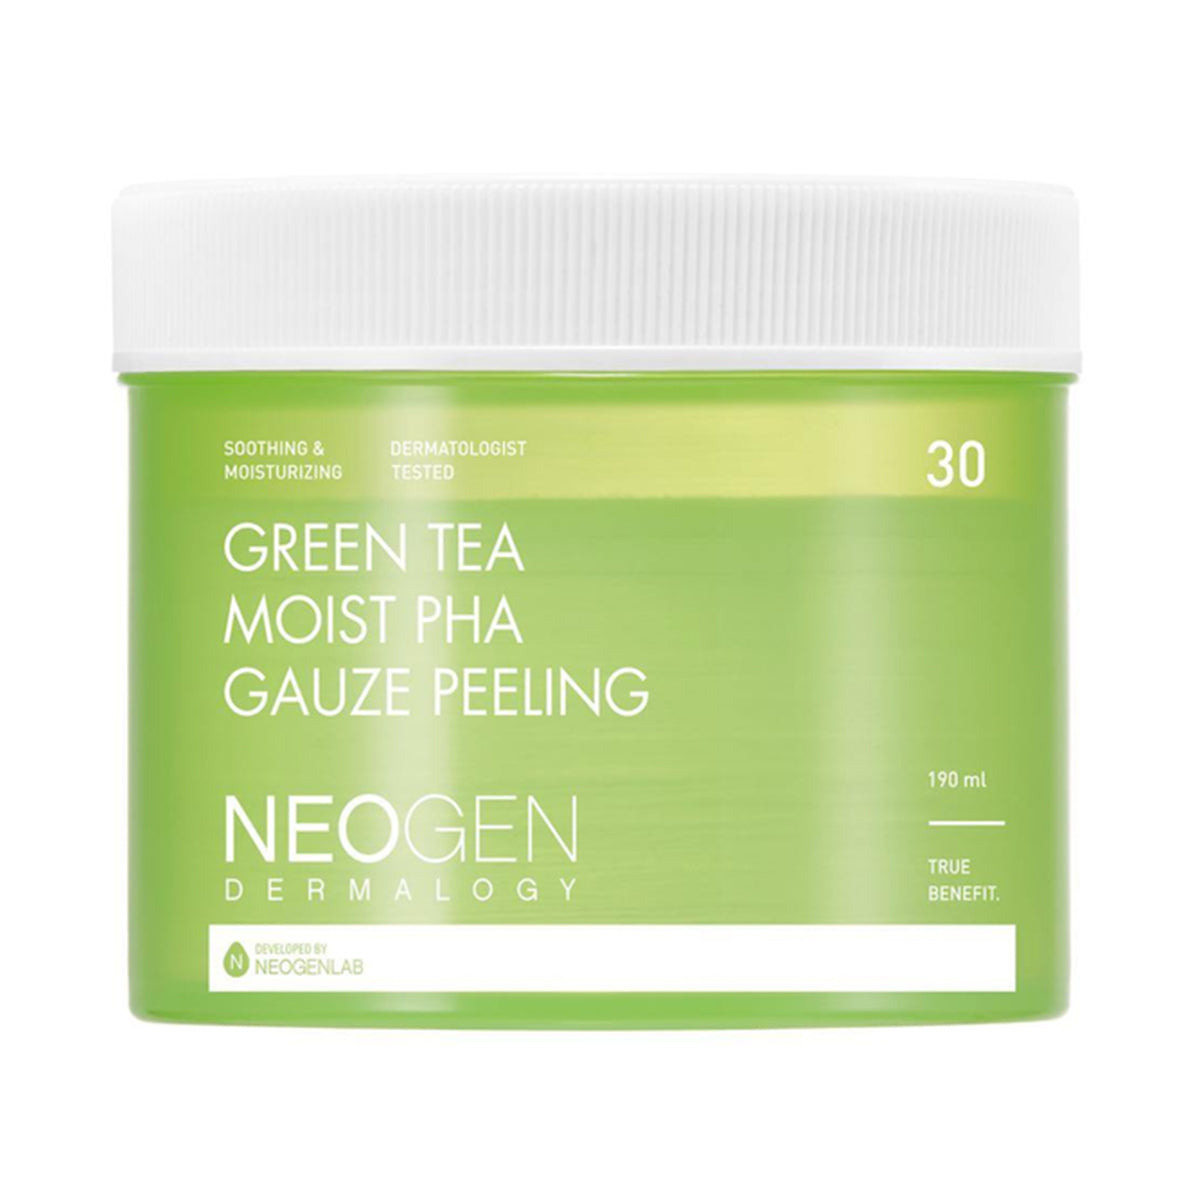 NEOGEN - Green Tea Moist PHA Gauze Peeling - 190ml (30 Pads)